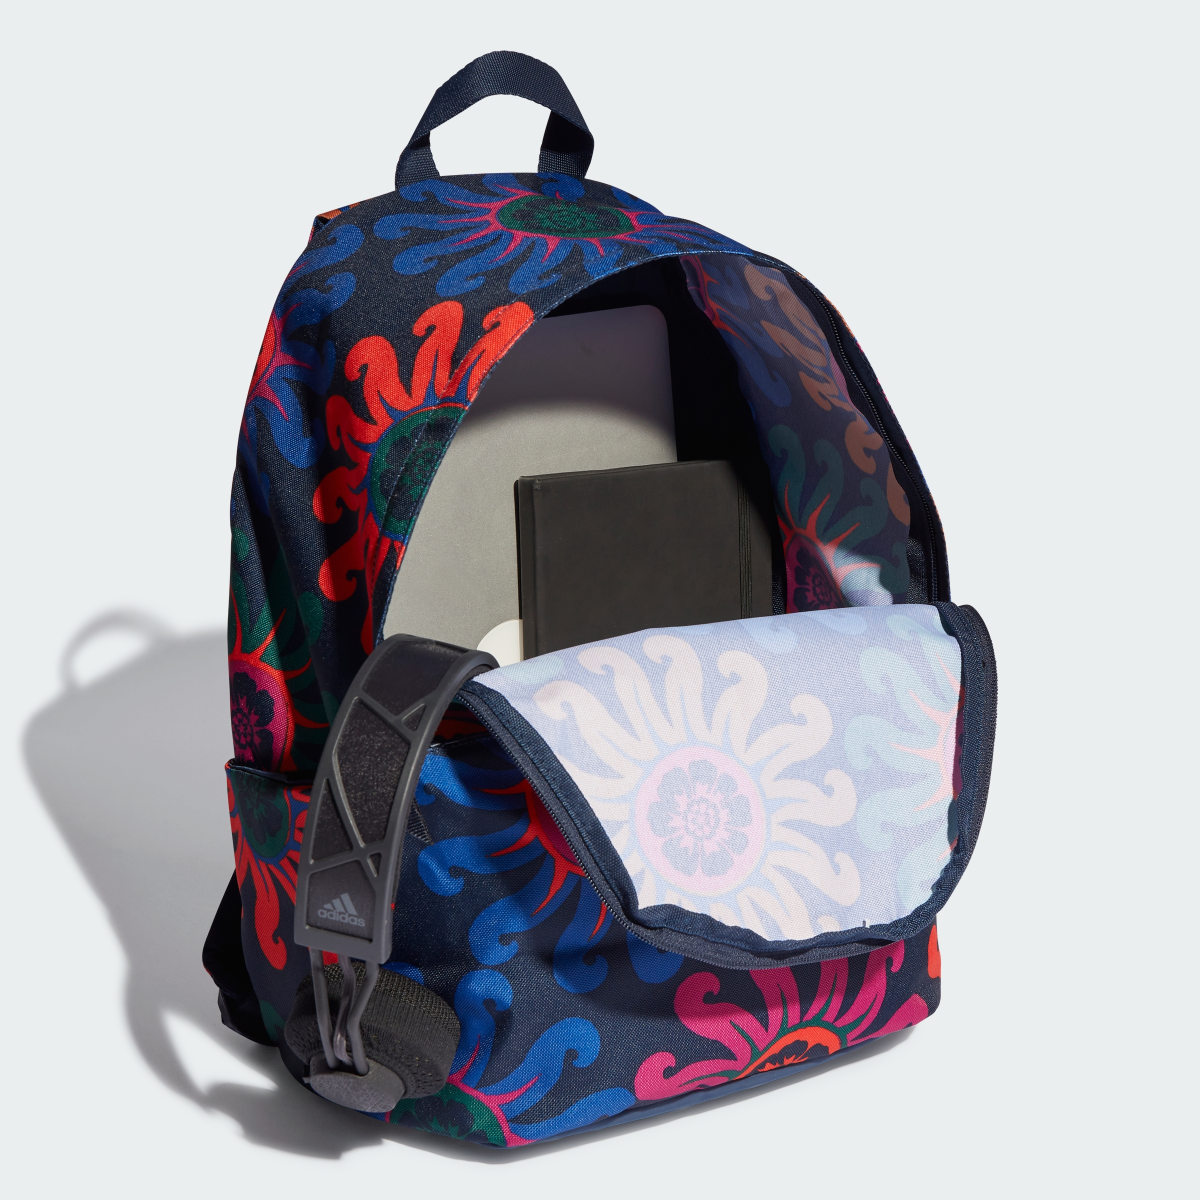 Adidas x FARM Backpack. 5